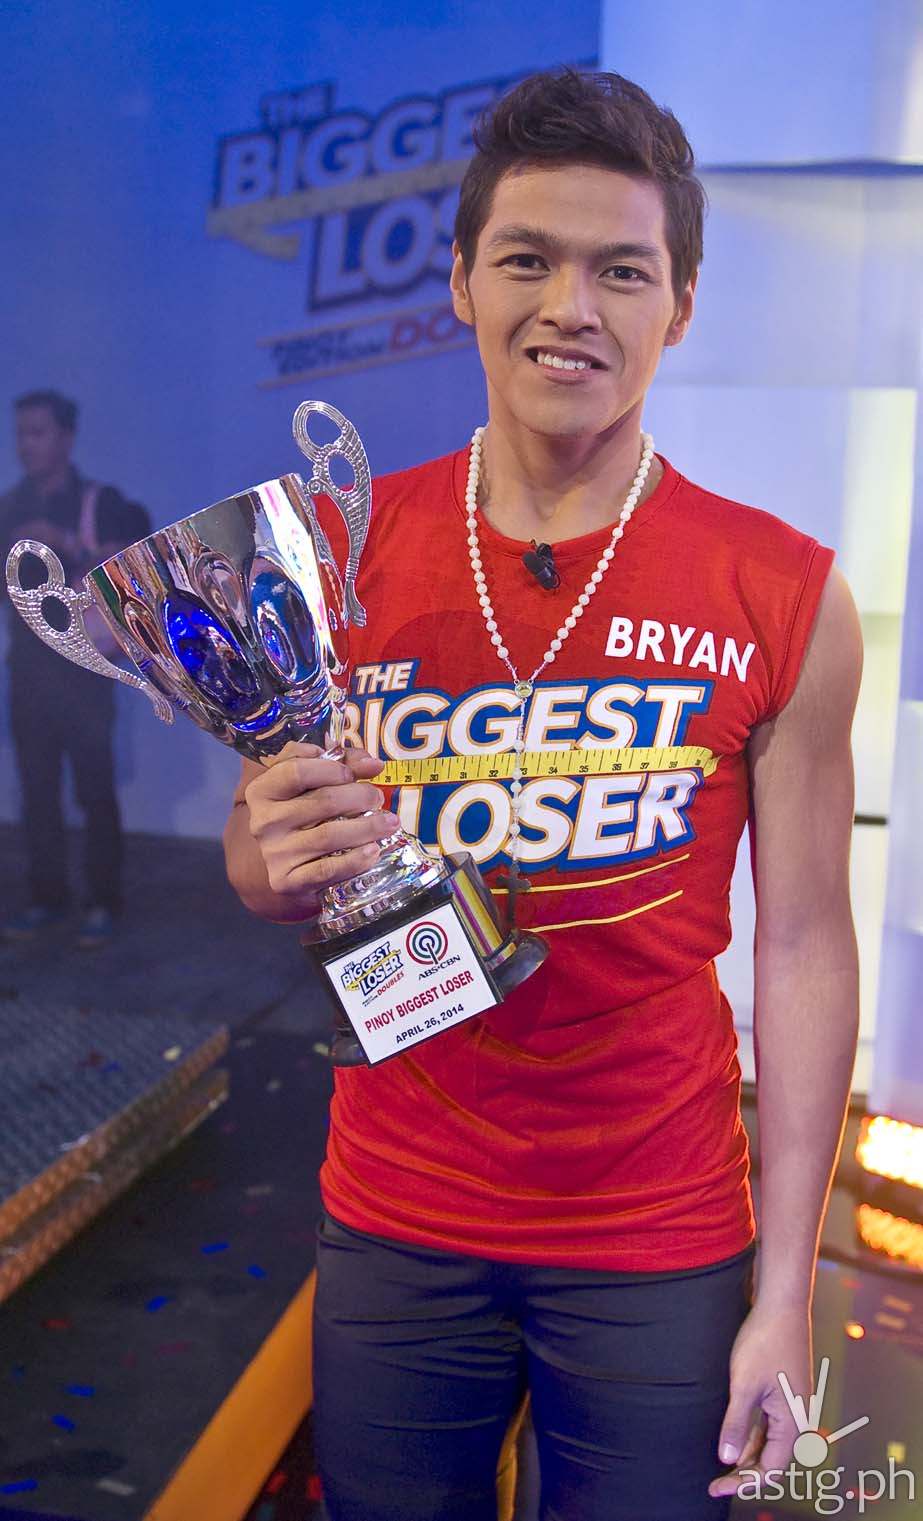 Pinoy Biggest Loser Bryan Castillo